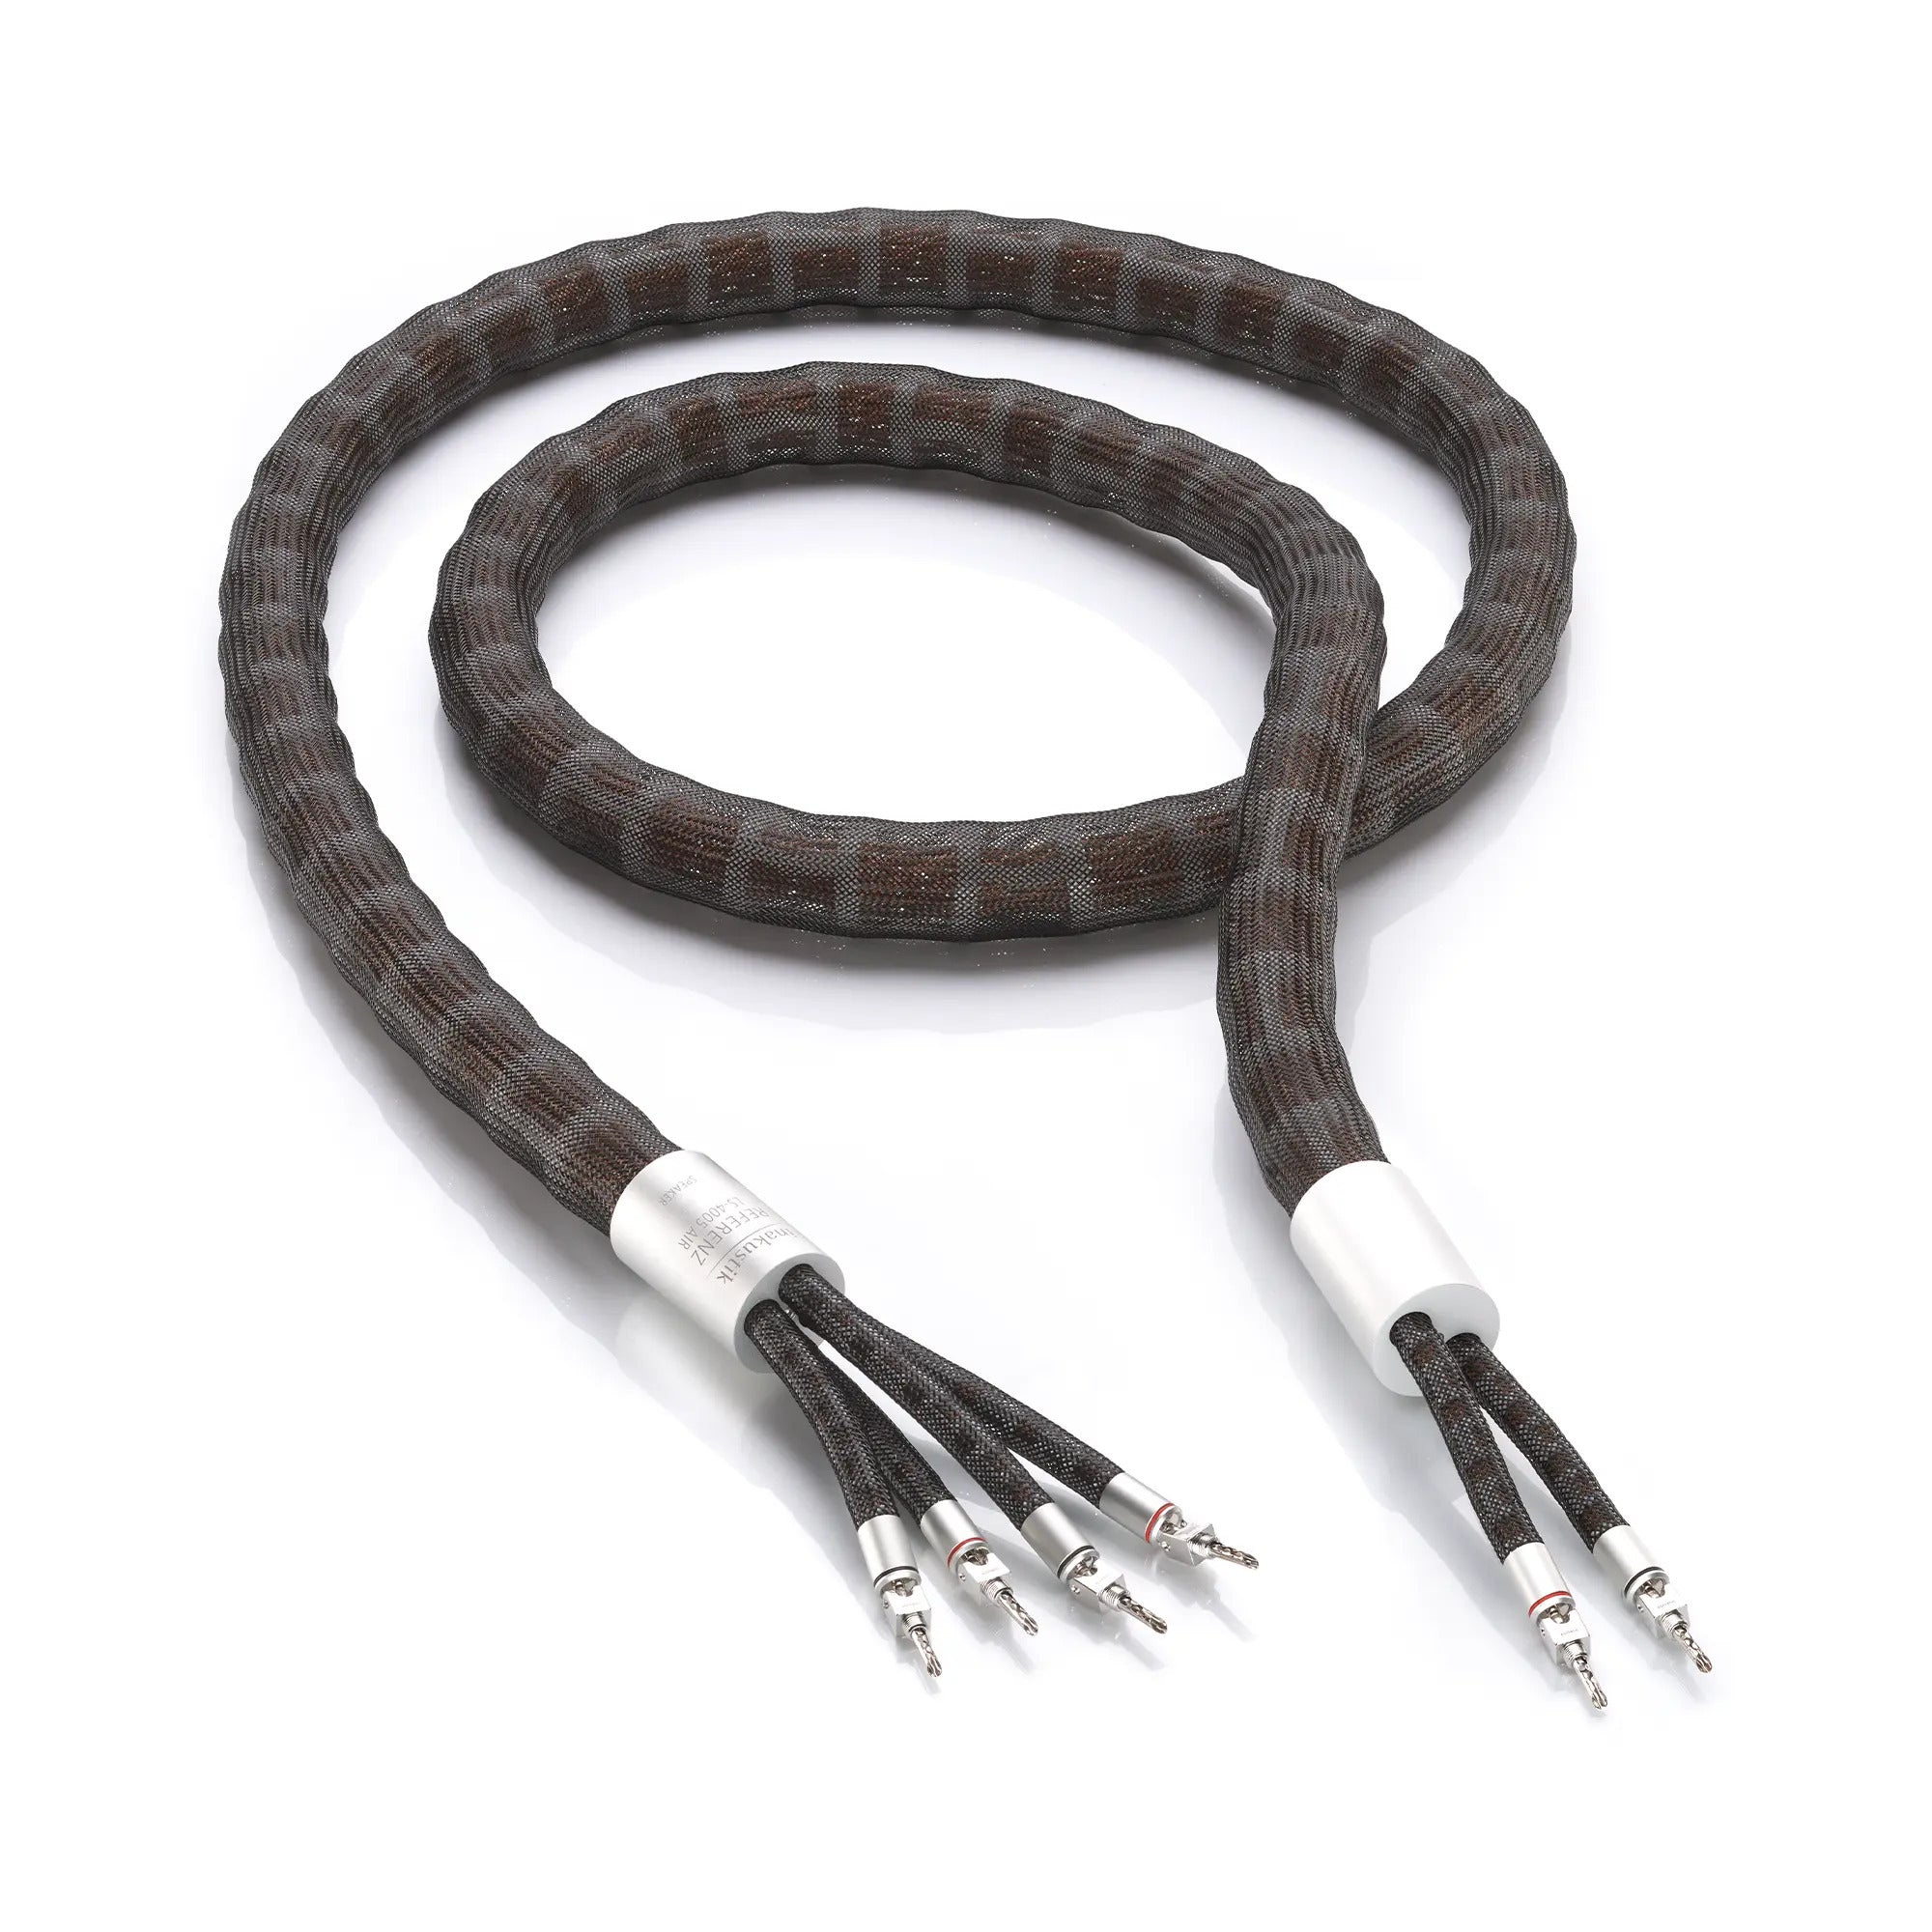 Inakustik Referenz LS-4005 Speaker Cable (pair)